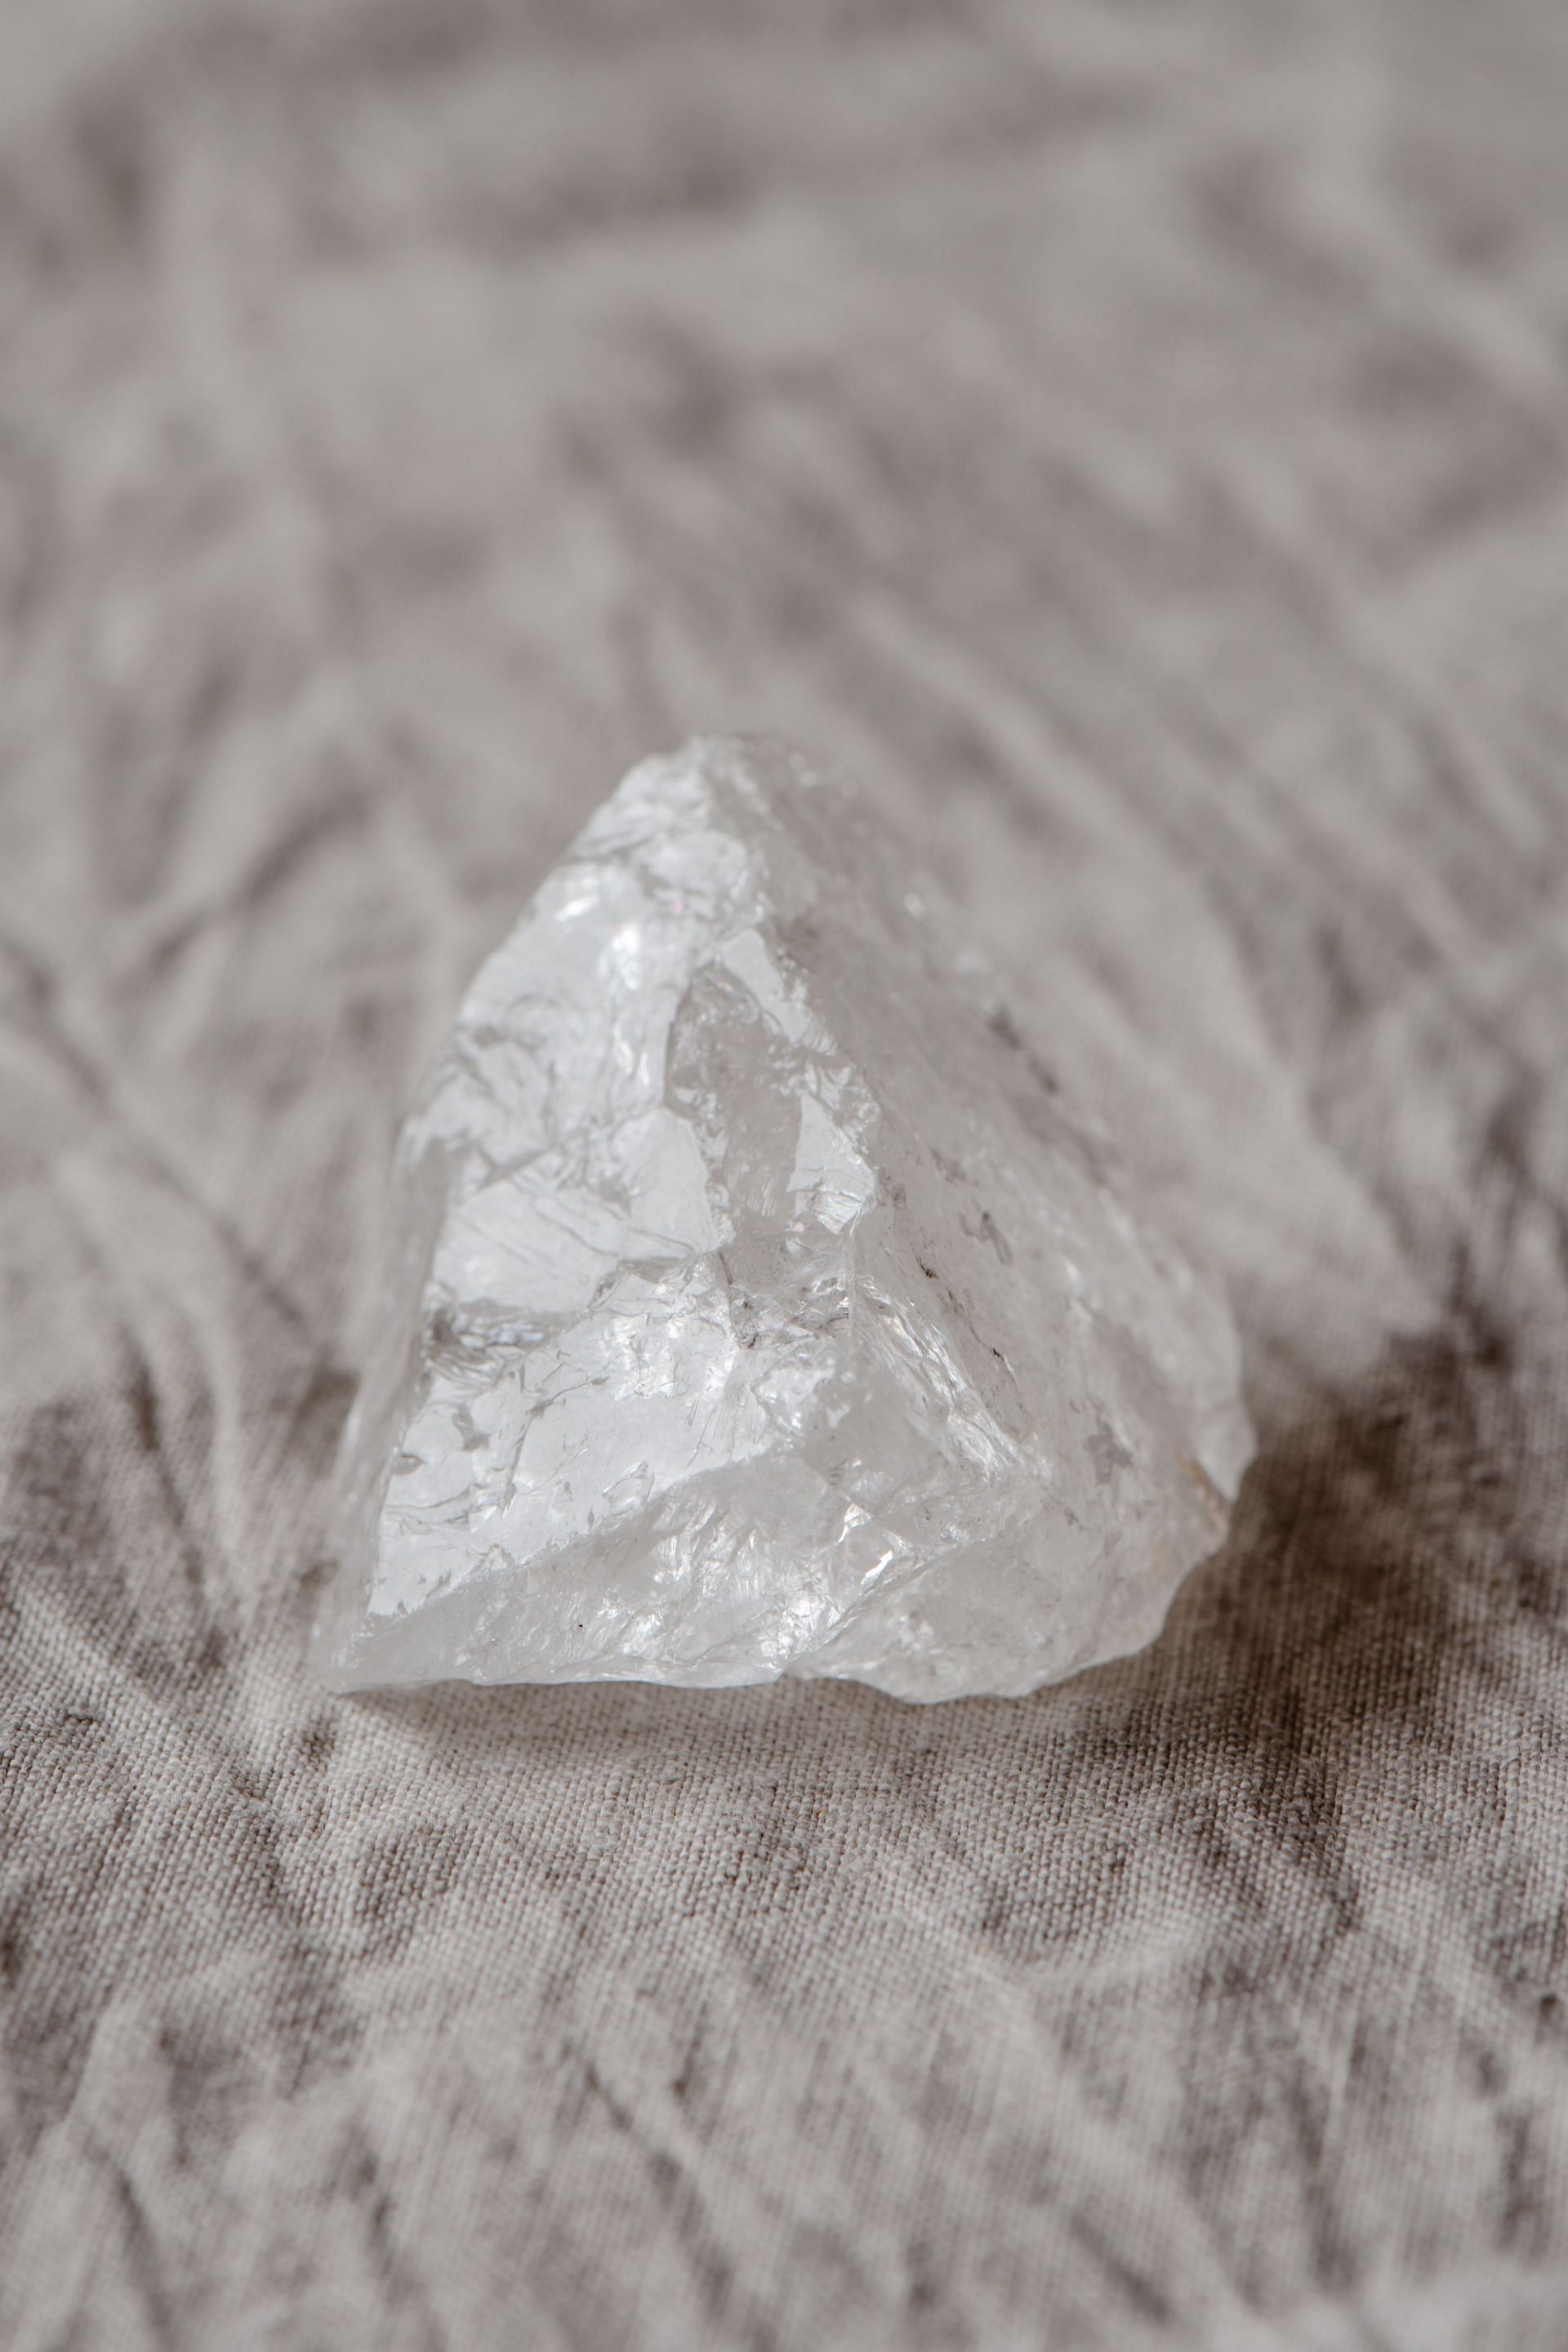 Clear quartz is said to improve sleep quality. (Image via Pexels)